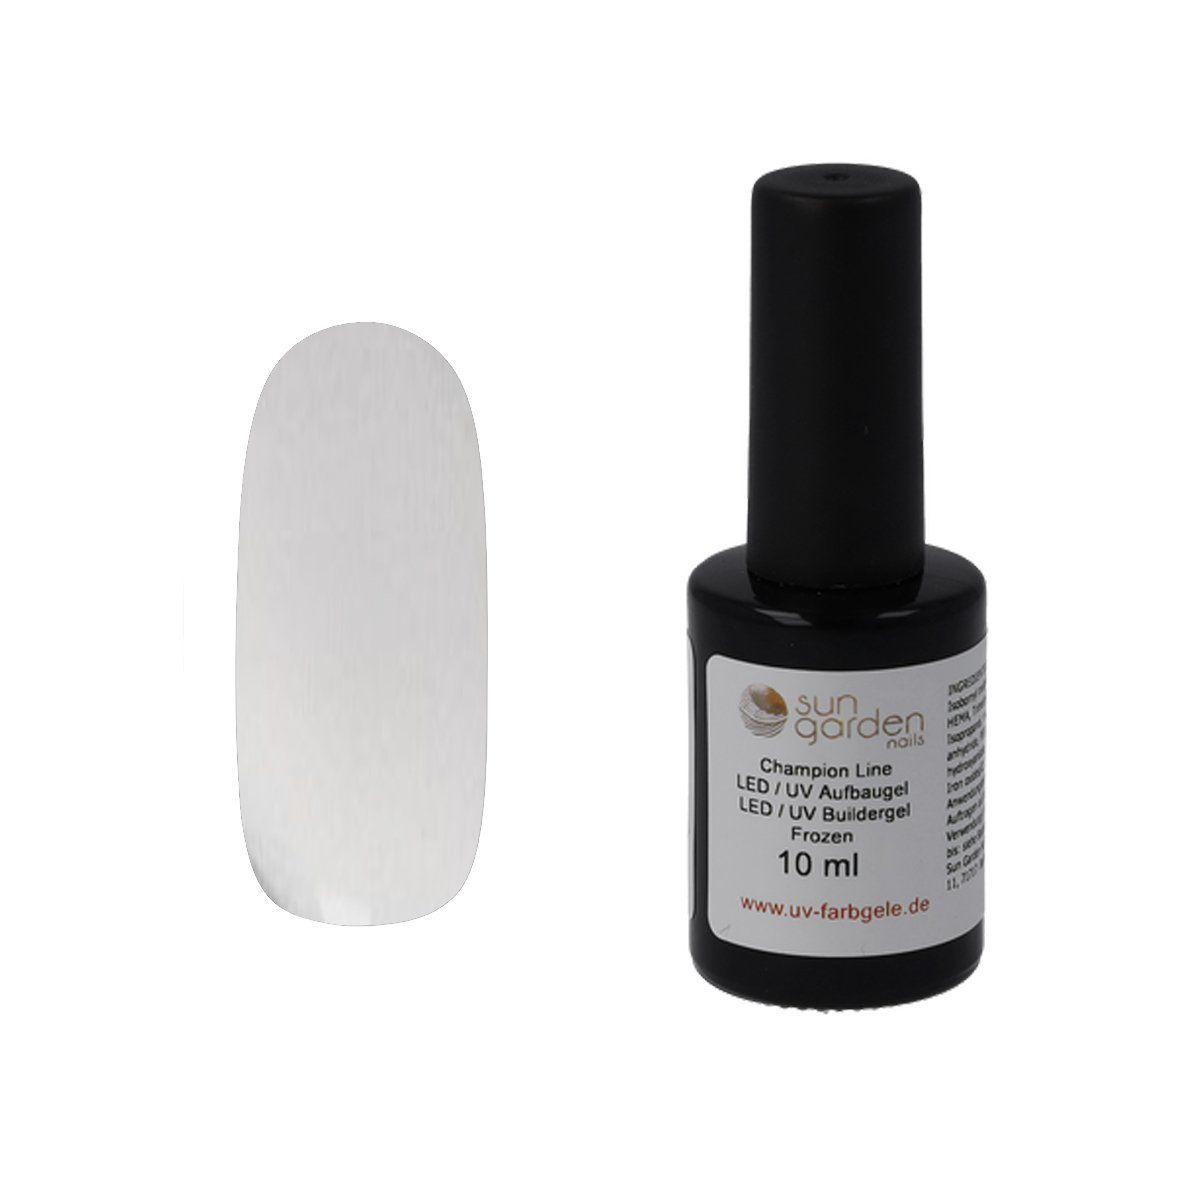 Sun Garden Nails UV-Gel 10 ml UV Aufbaugel Frozen - Pinselflasche